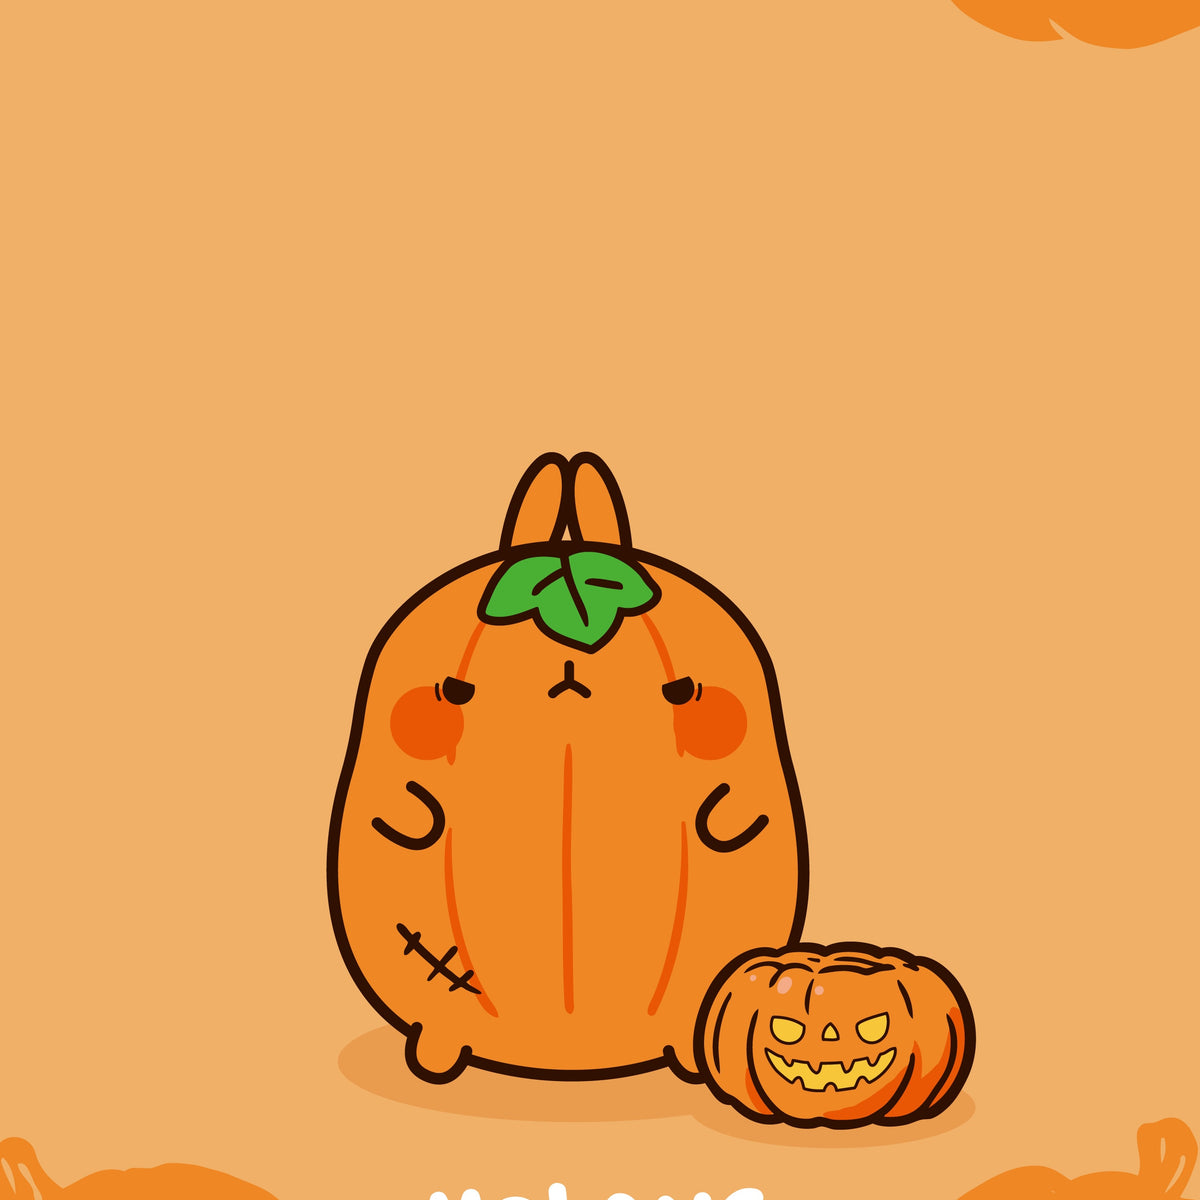 30 Preppy Halloween Wallpaper Ideas  Black Cat  Pumpkin  Idea Wallpapers   iPhone WallpapersColor Schemes